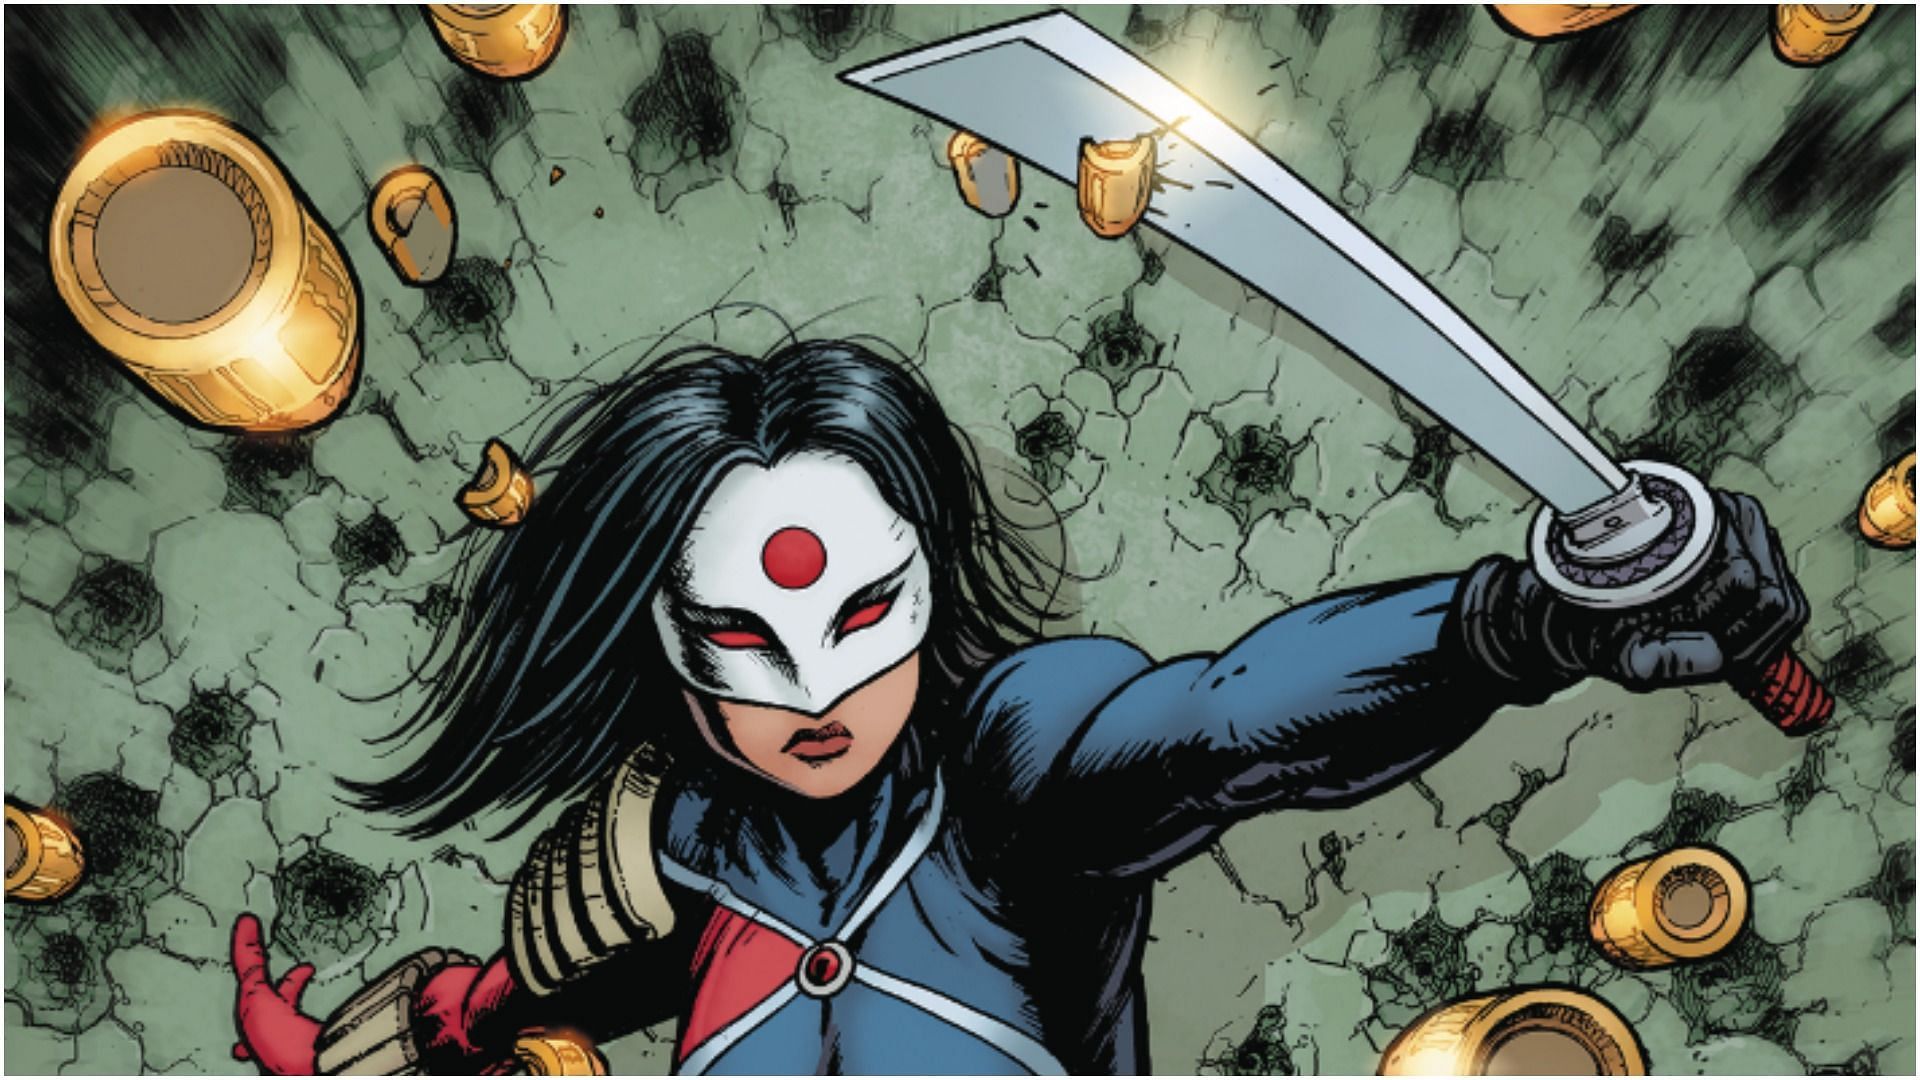 Katana is highly skilled with the sword (Image via DC)